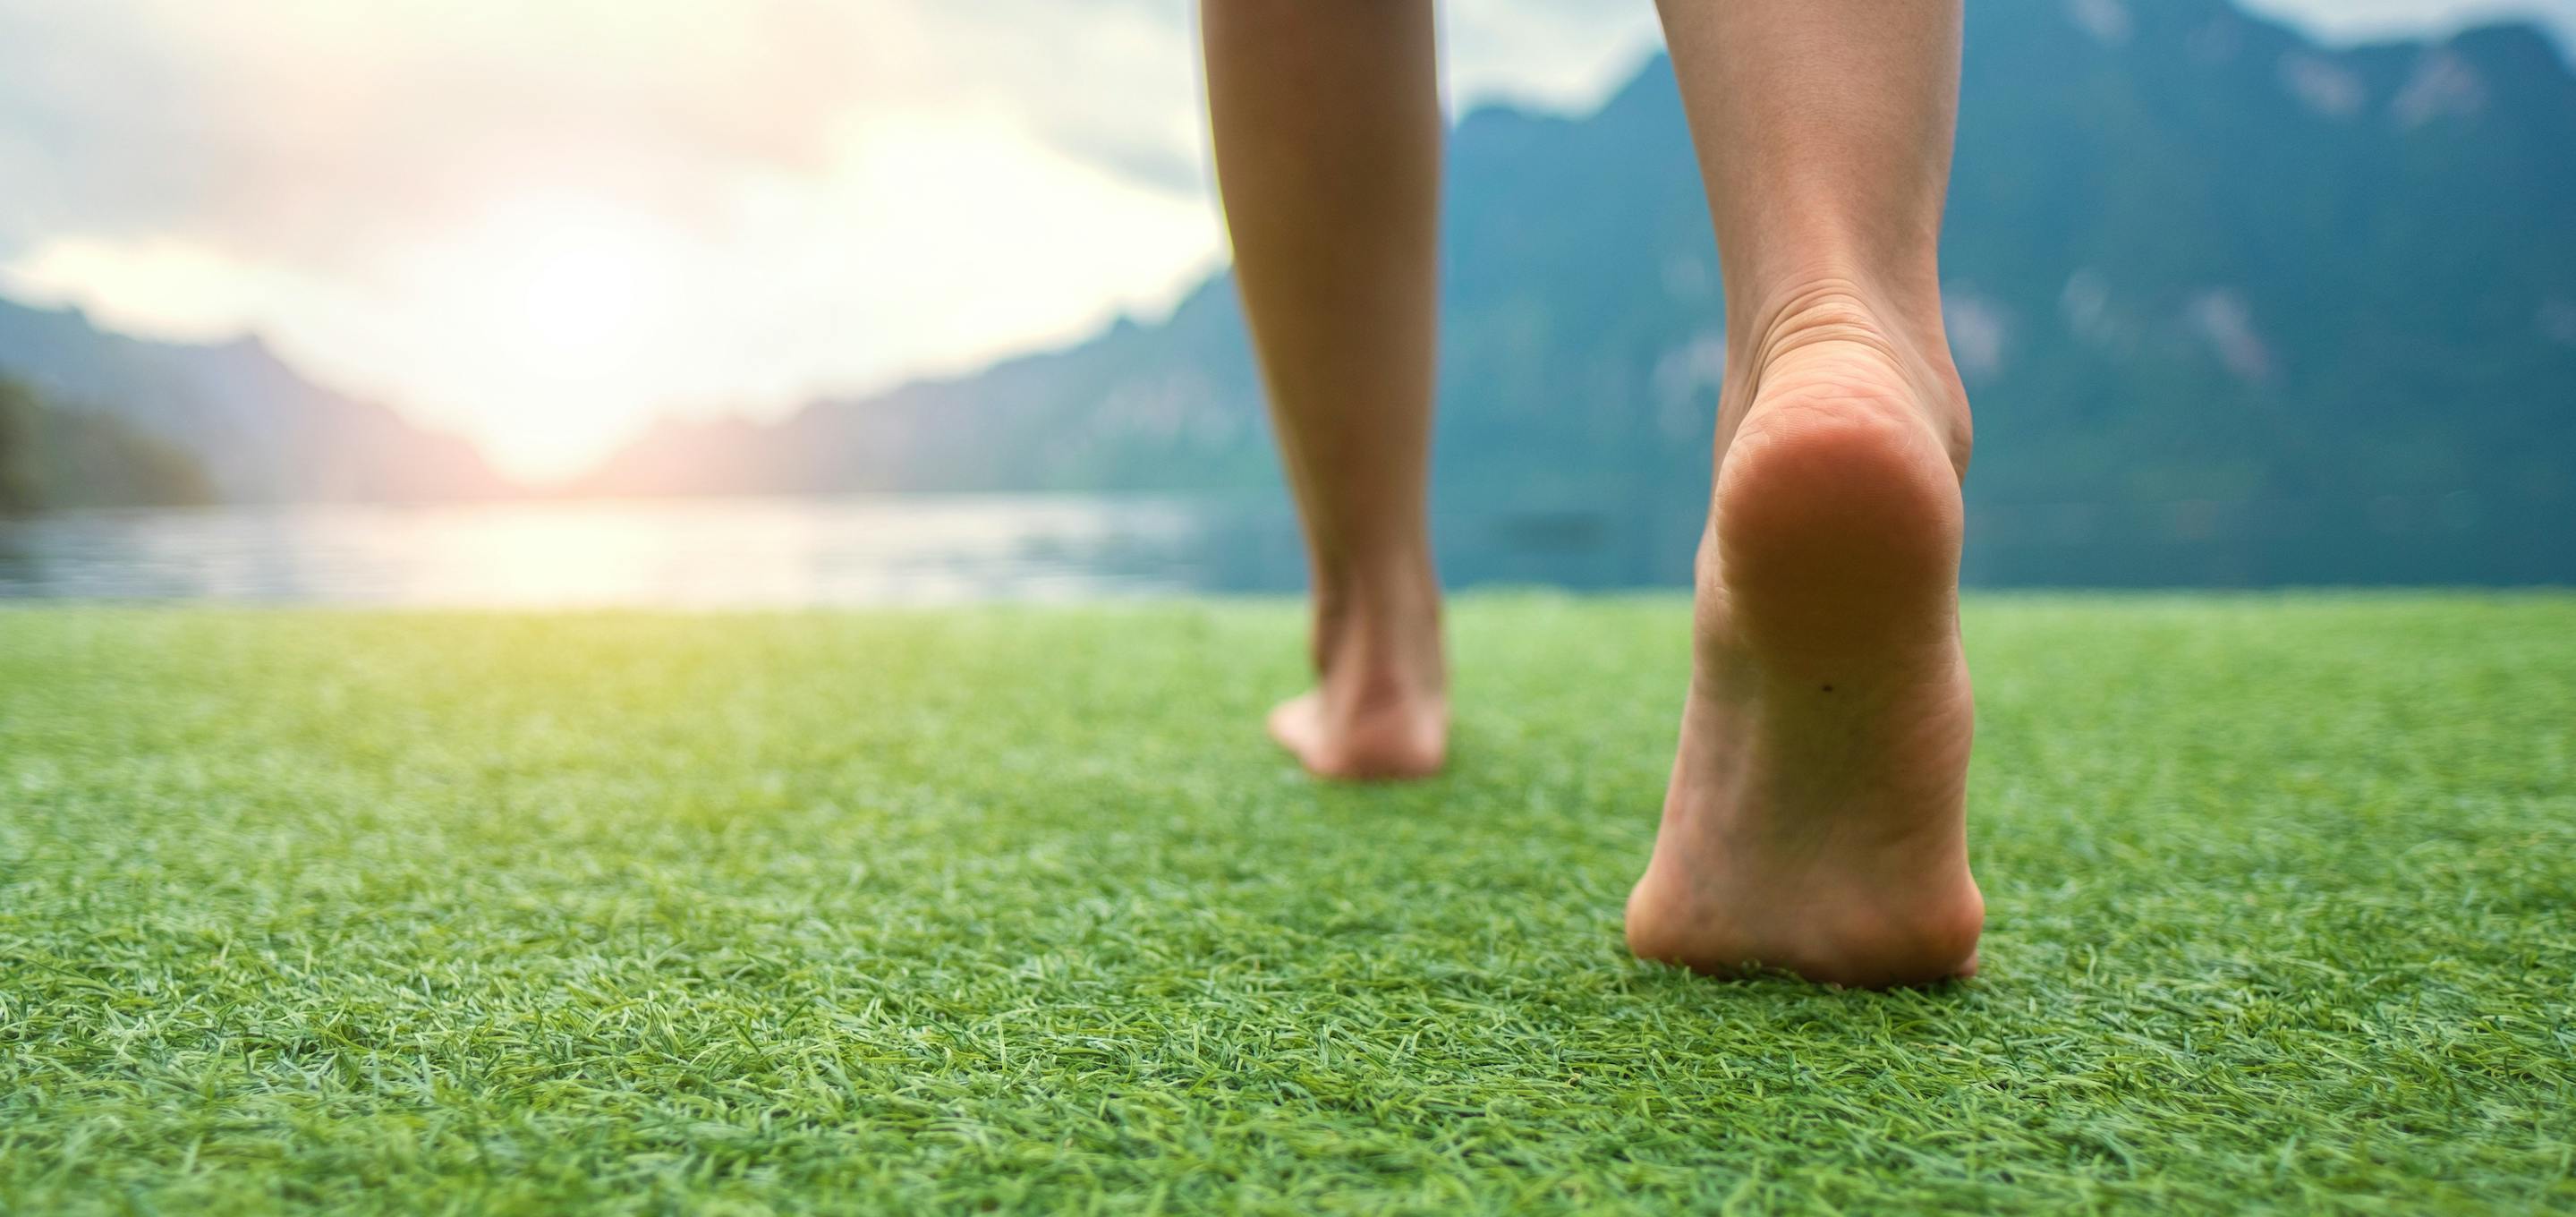 feet walking on grass